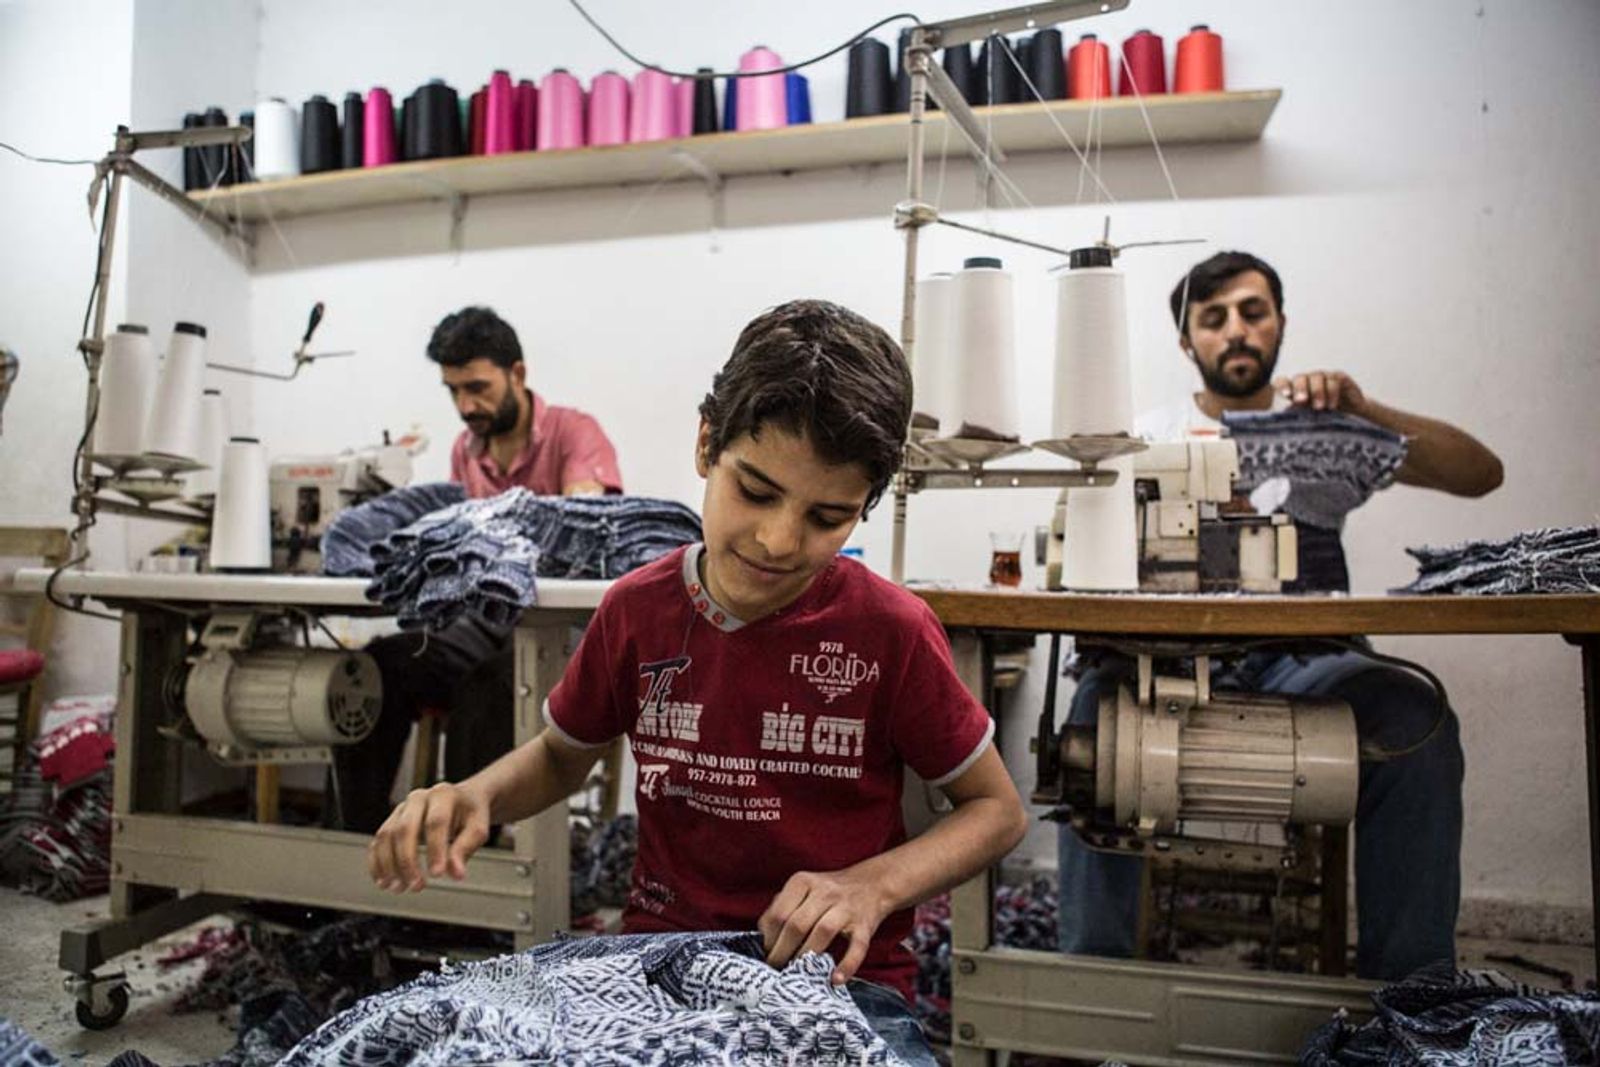 © Valerio Muscella - A Syrian boy works in a Turkish textile workshop in Gaziantep, Turkey. May 2016.